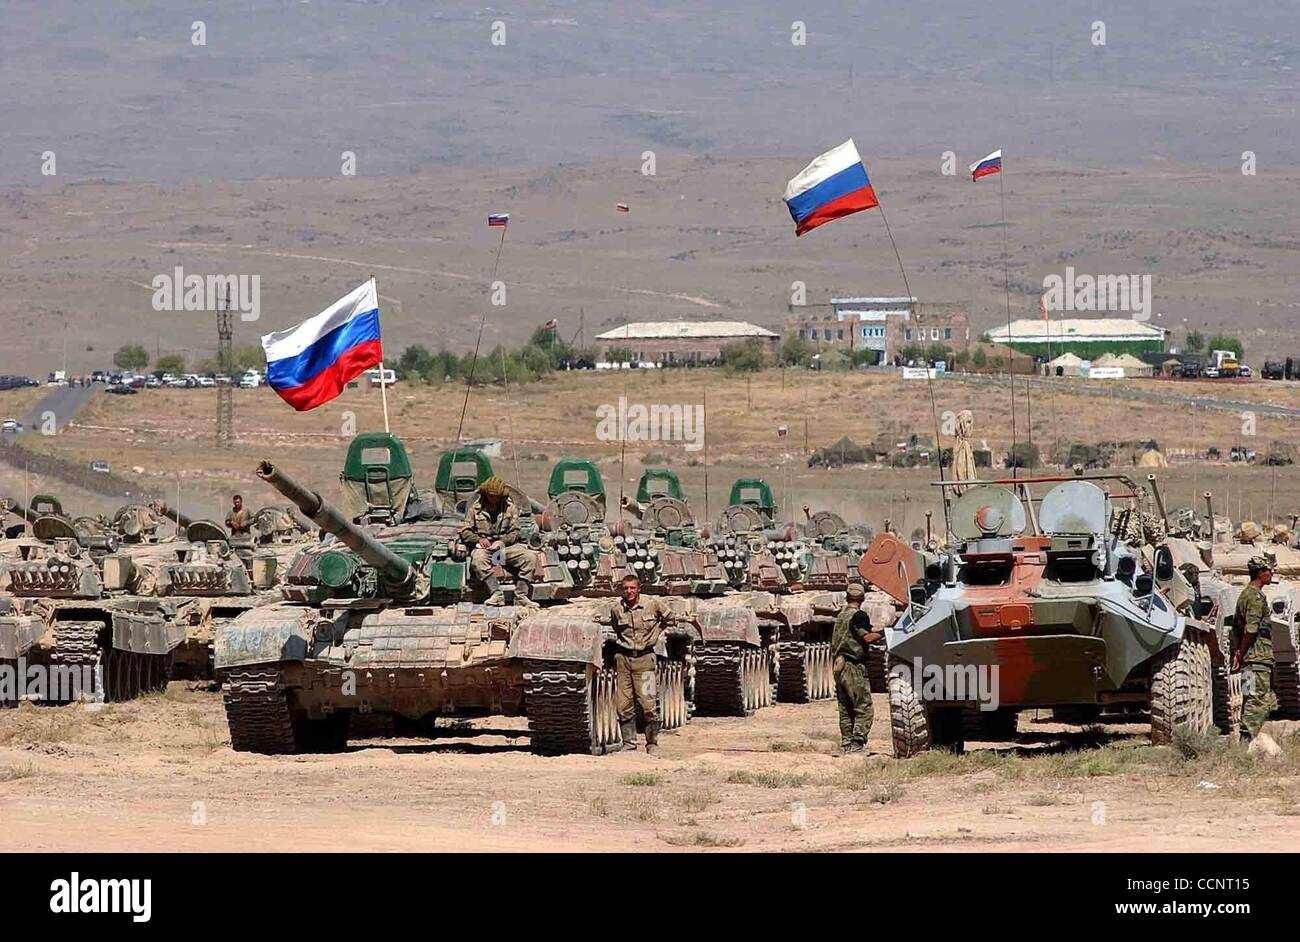 sep-12-2003-yerevan-armenia-russian-troops-of-102nd-russian-military-CCNT15.jpg